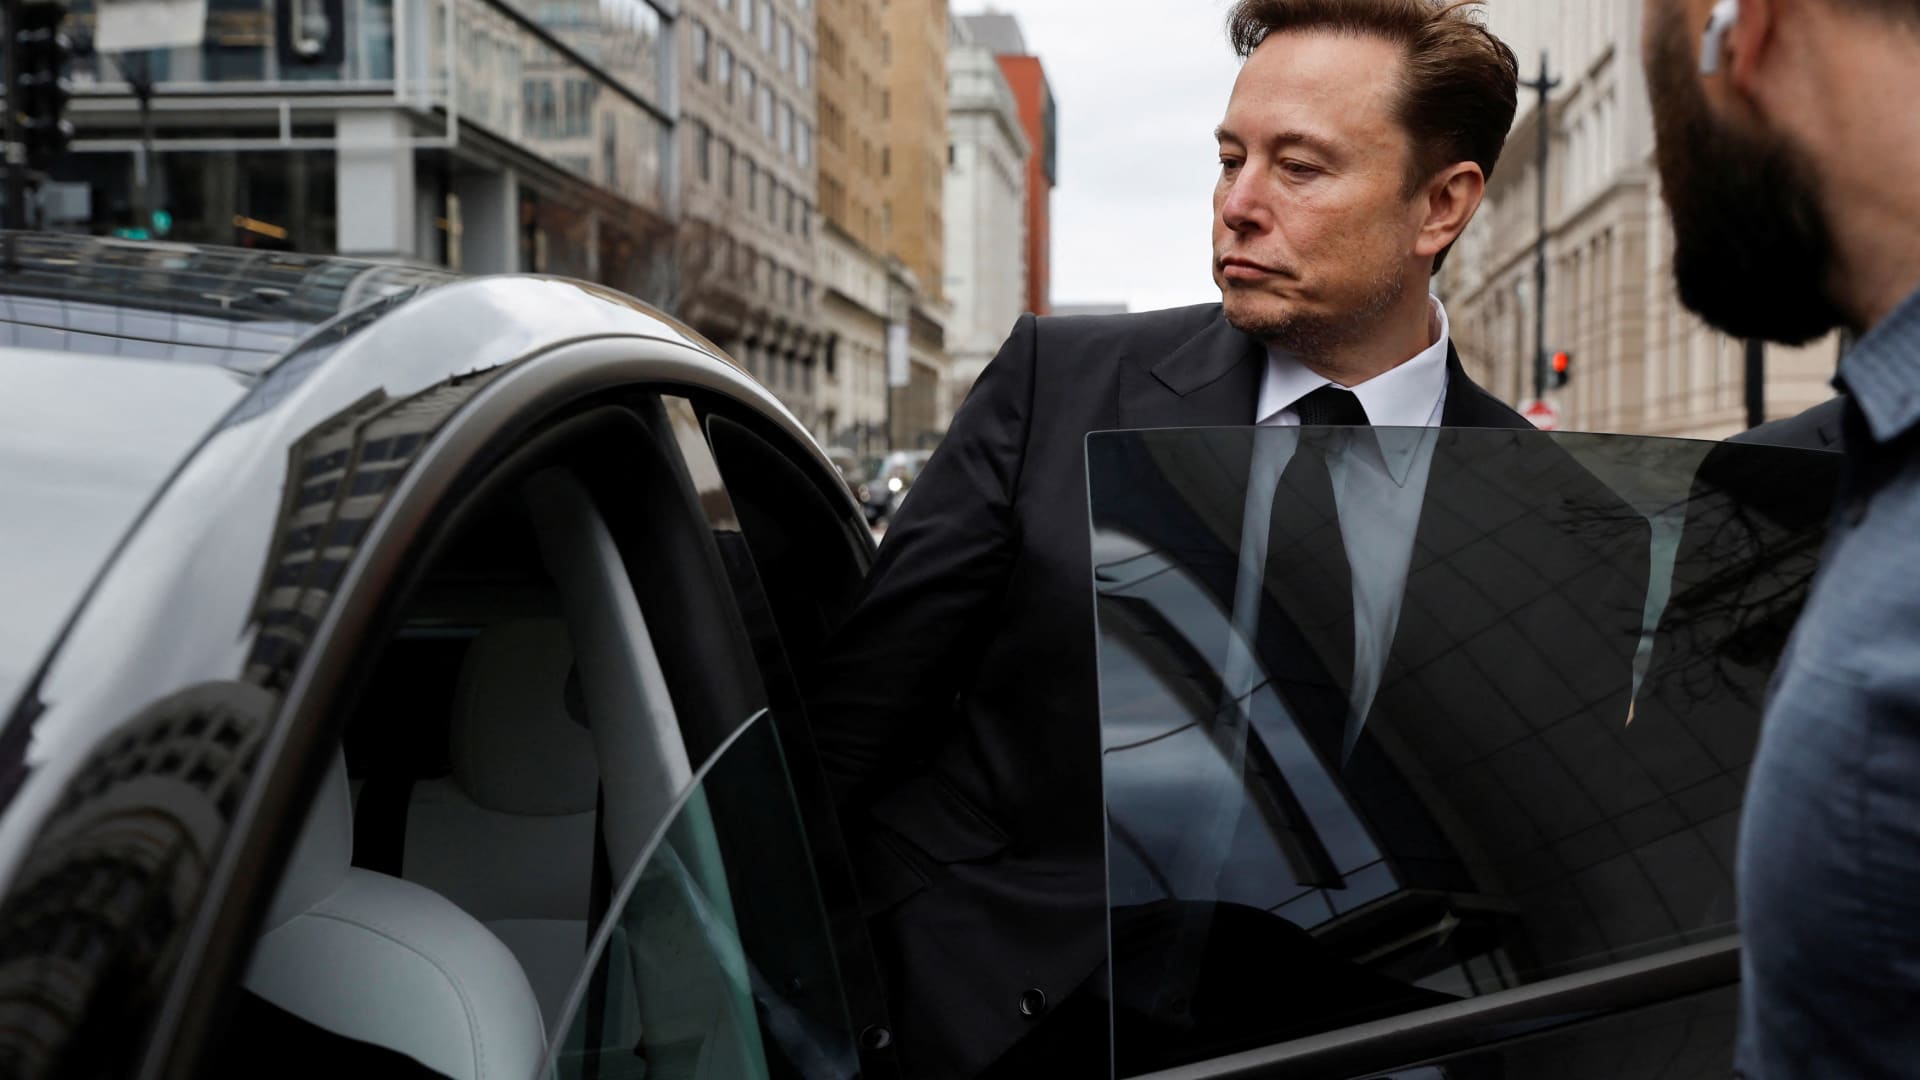 Jury finds Musk, Tesla not liable in securities fraud trial following ‘funding secured’ tweets